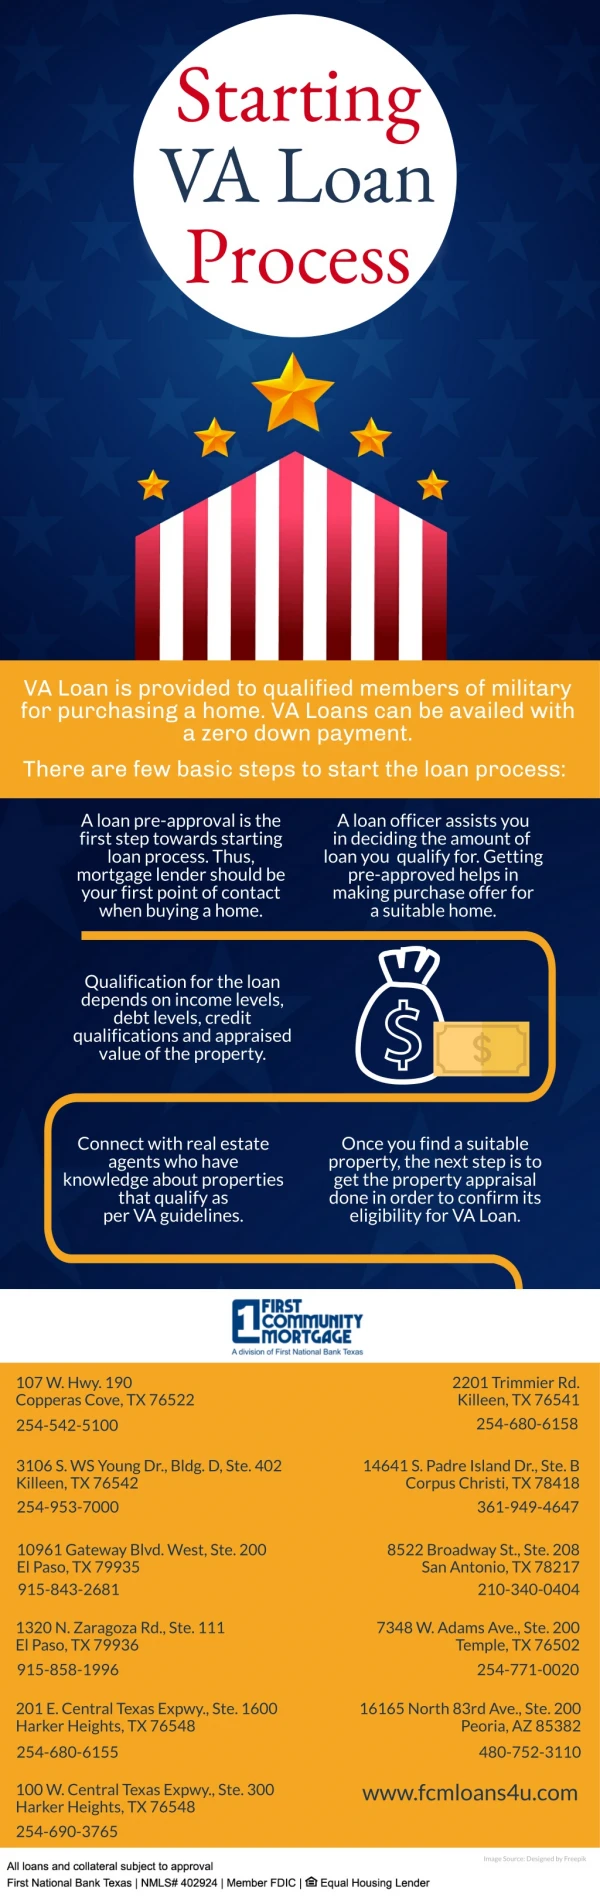 Starting VA Loan Process